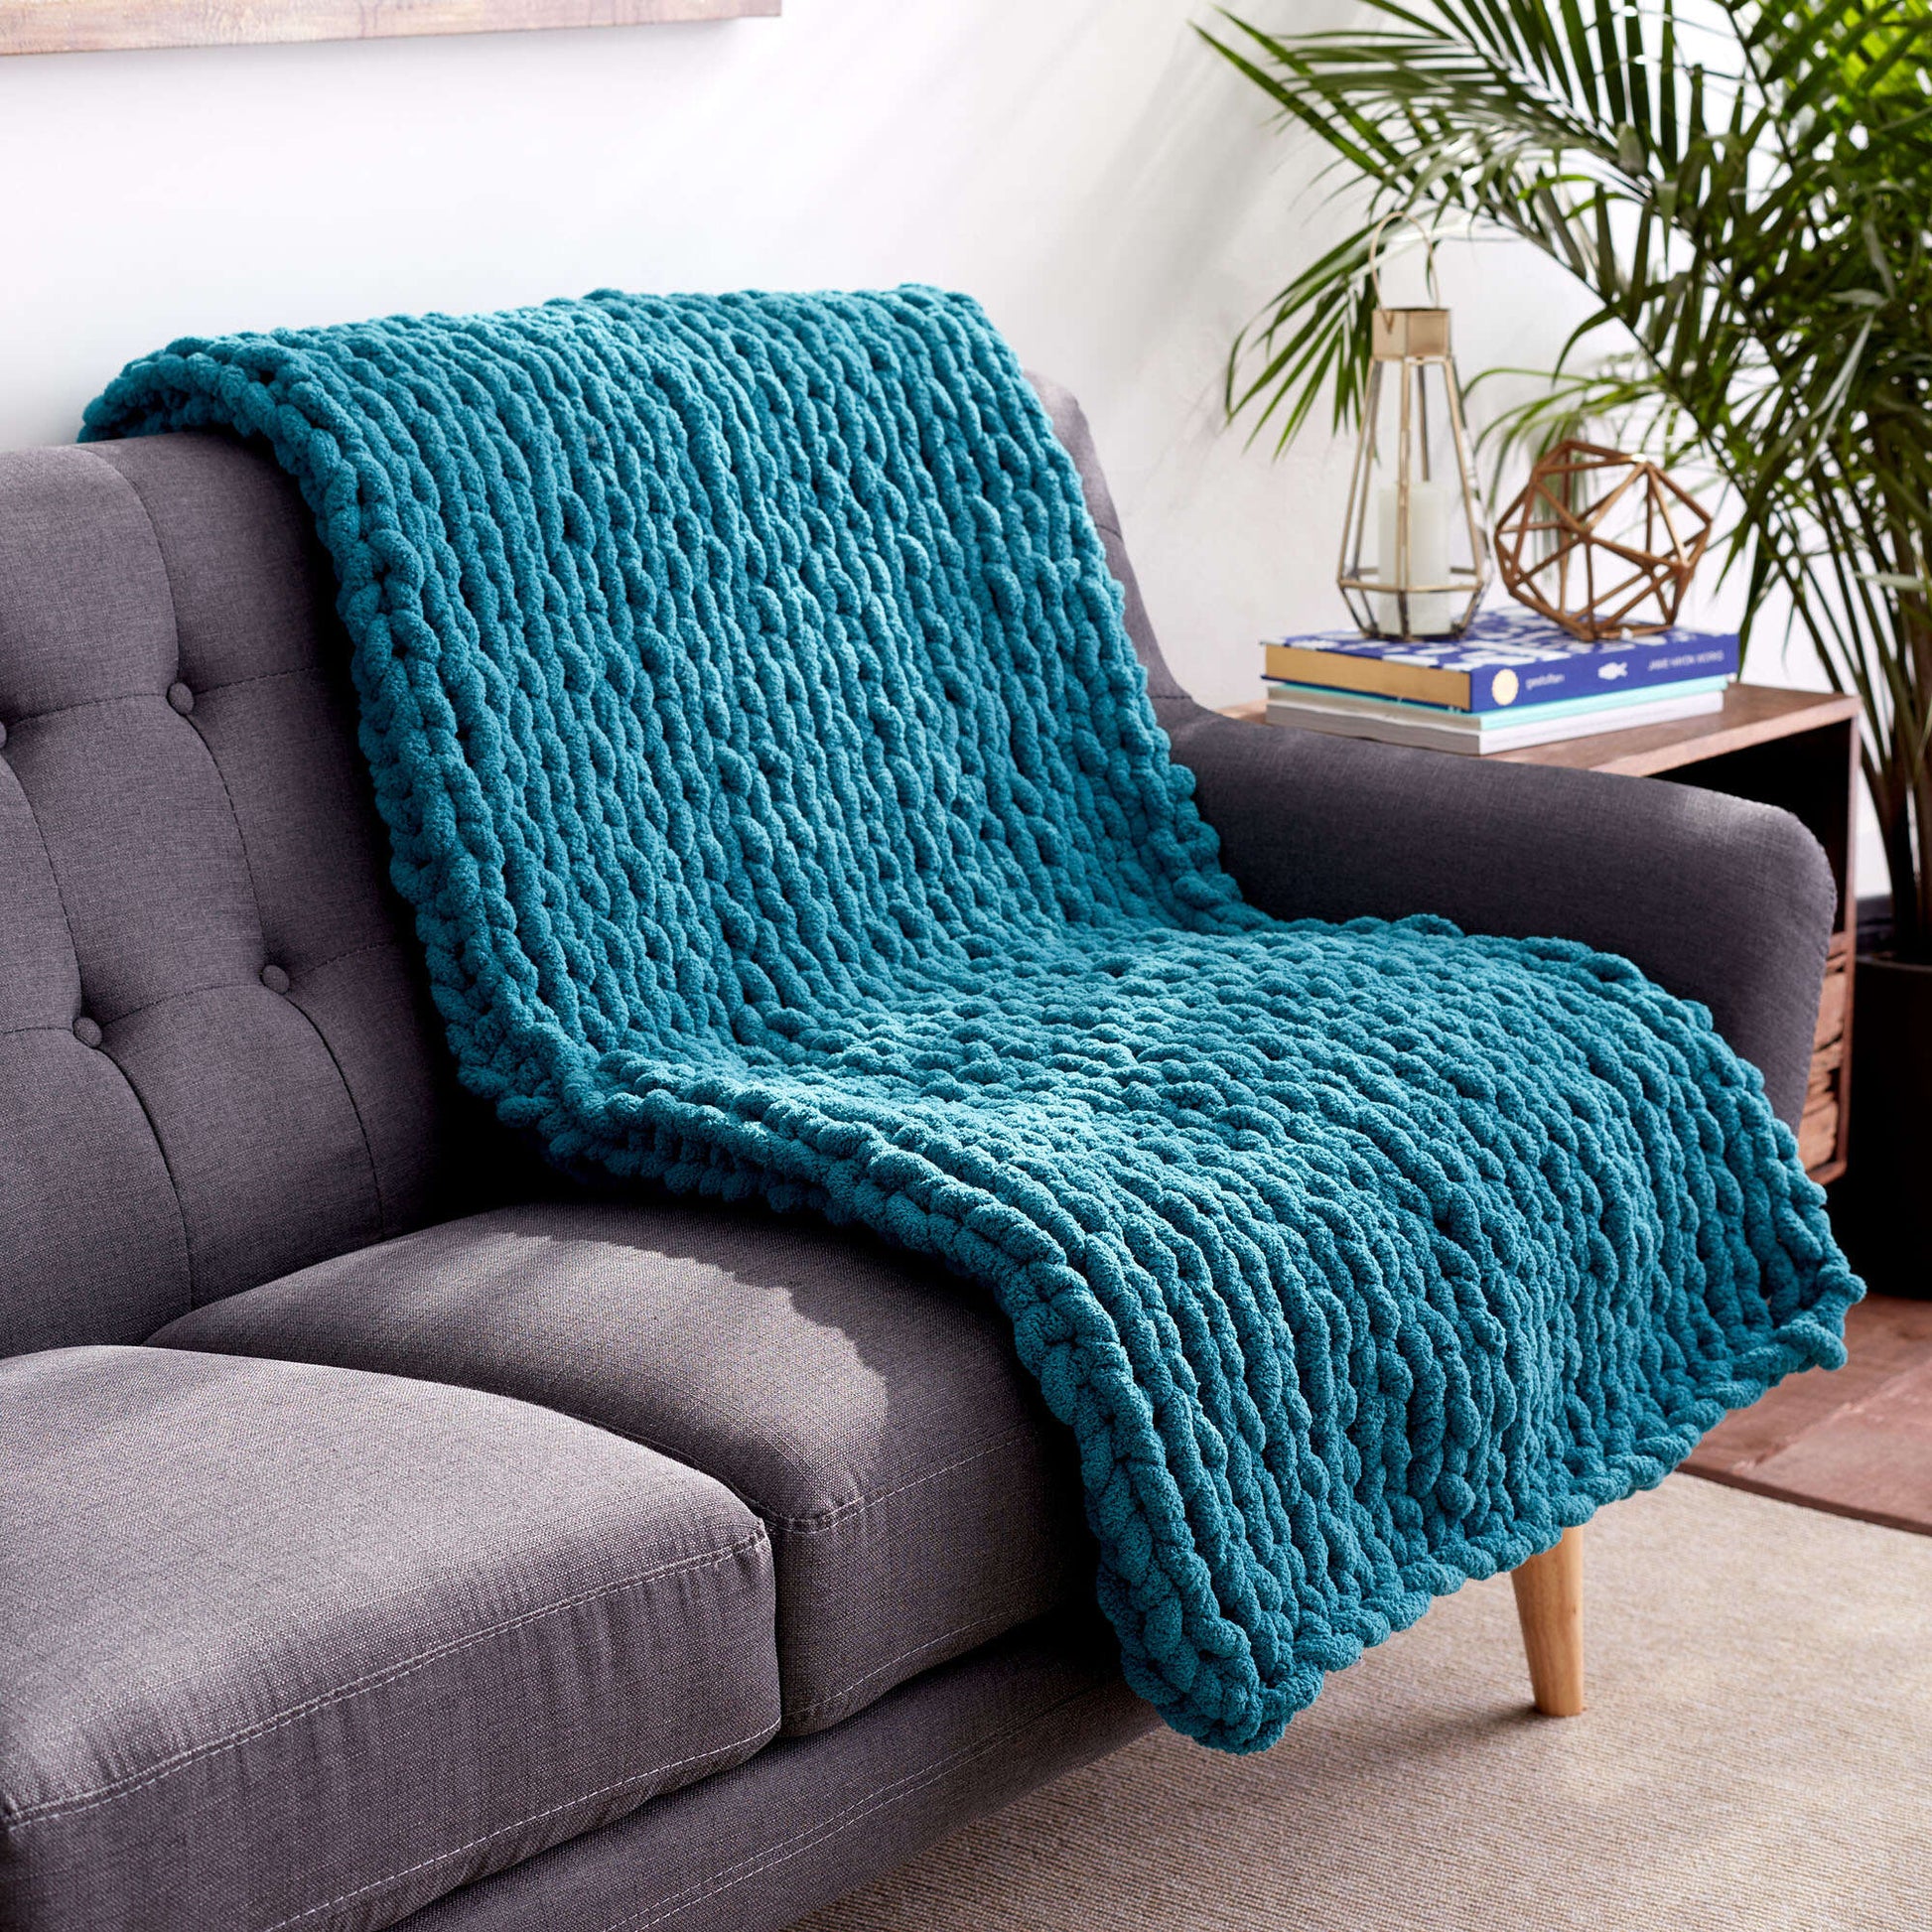 Free Bernat Super Simple Blanket To Knit Pattern